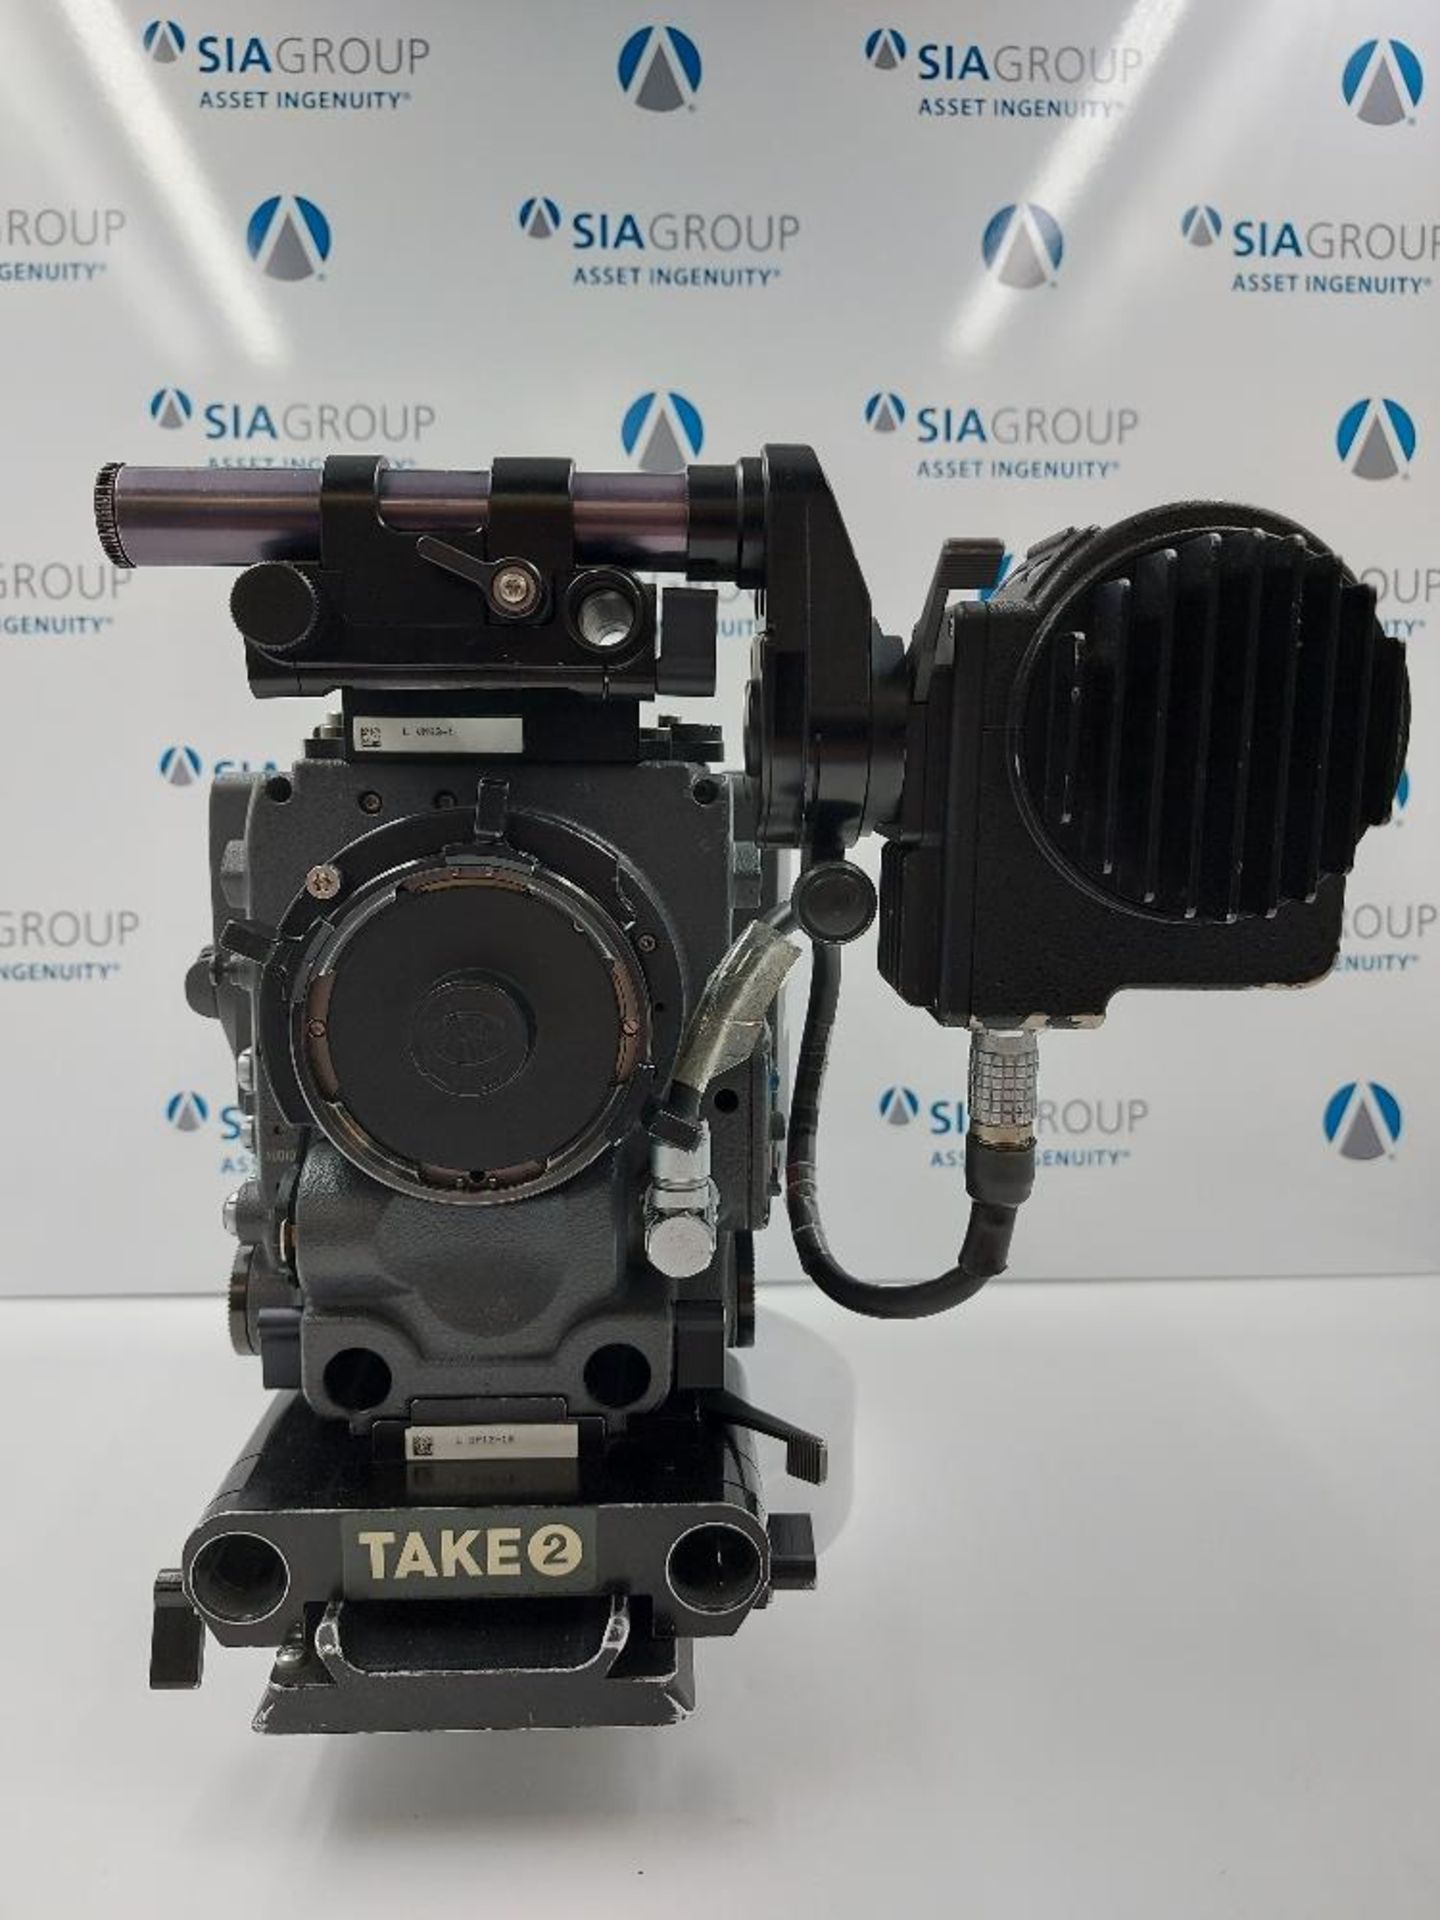 ARRI Alexa SXT Plus 35mm Sensor Digital Camera System - Image 3 of 13